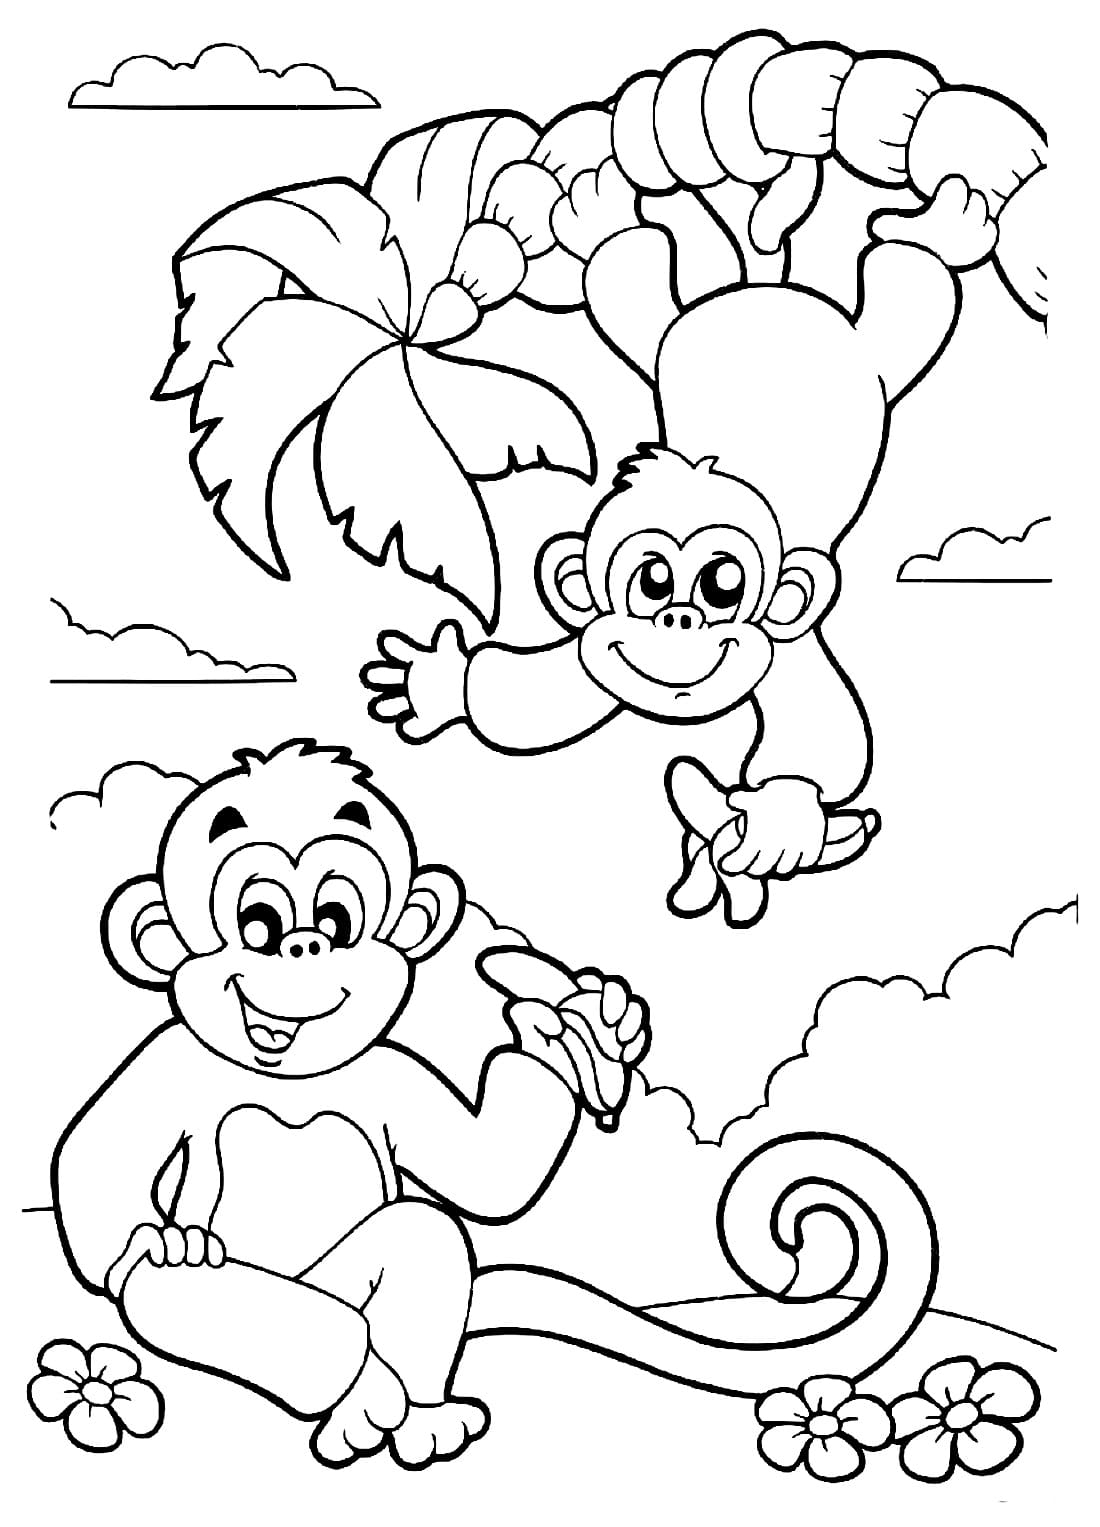 Раскраски Раскраска обезьянка удивлена обезьяна, Раскраска Веселые обезьянки обезьяна.